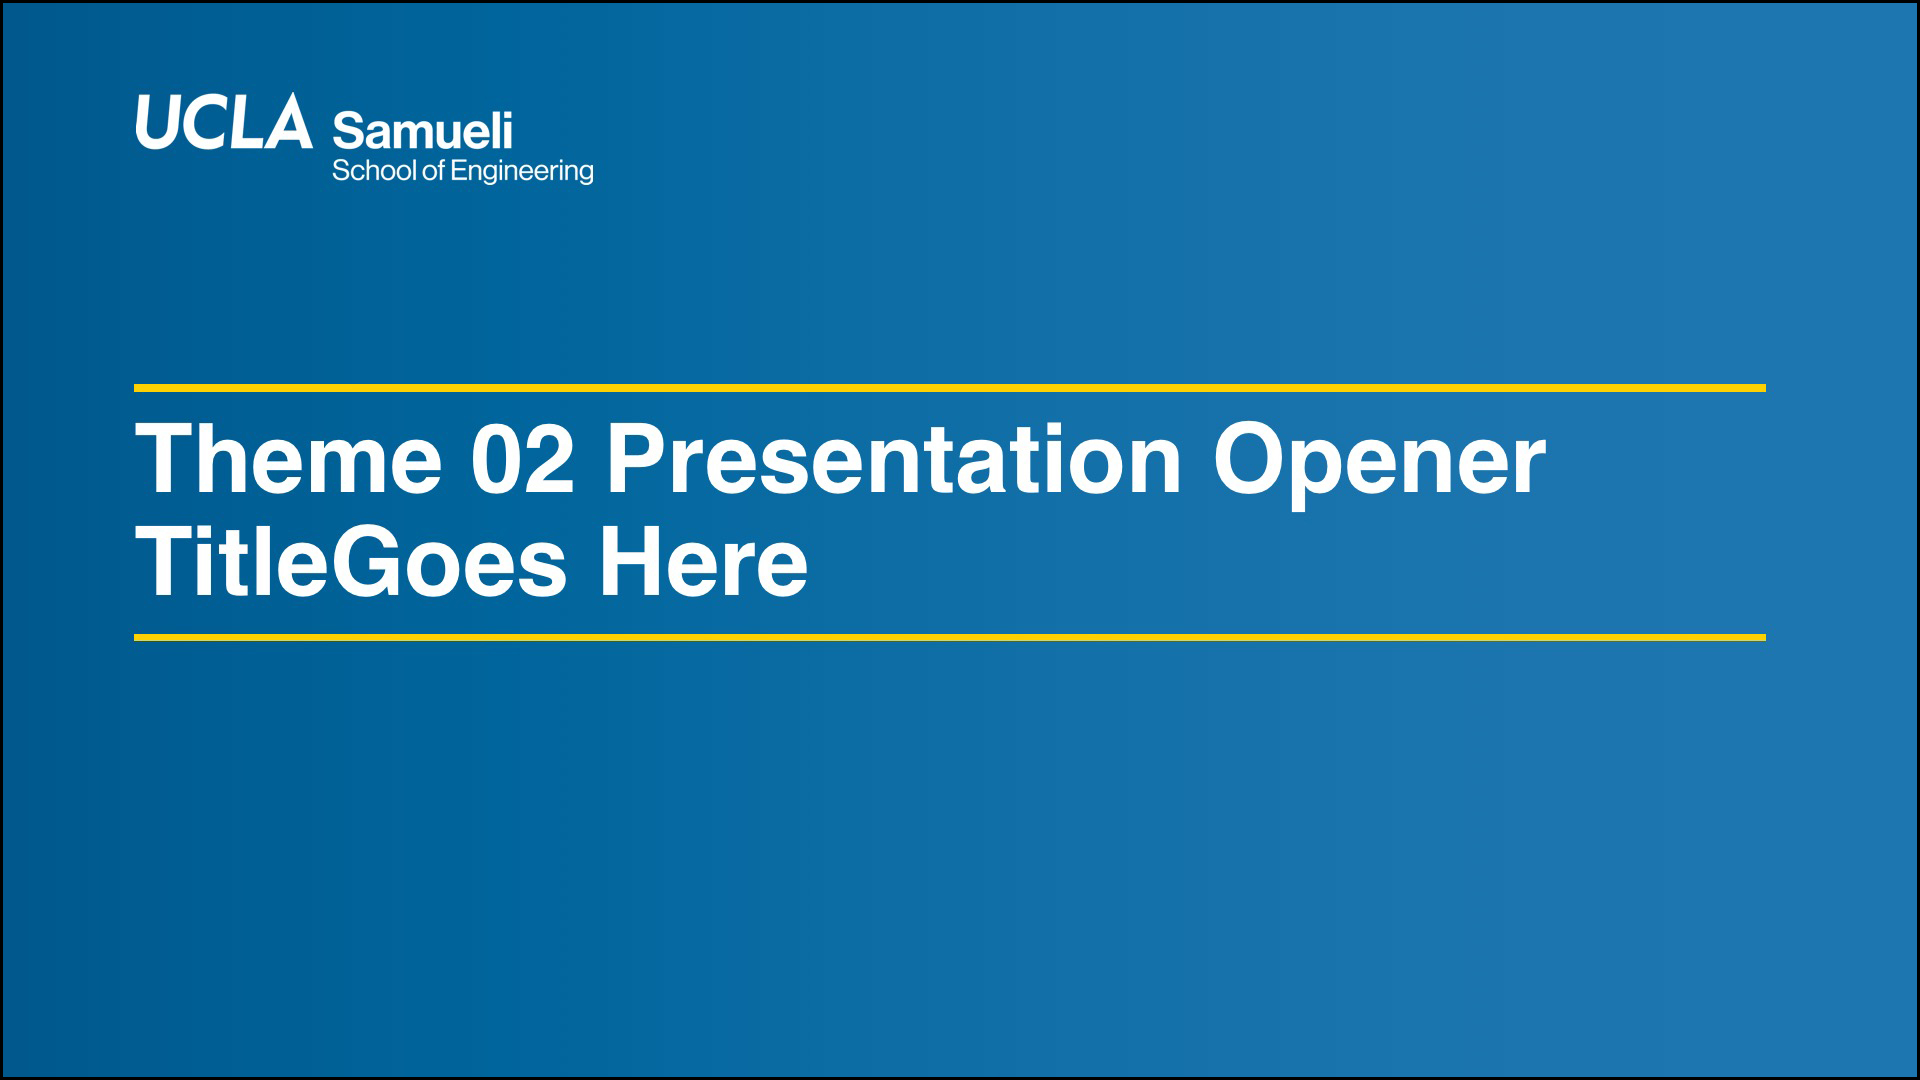 UCLA Samueli School of Engineering PowerPoint Presentation Template (Blue background)